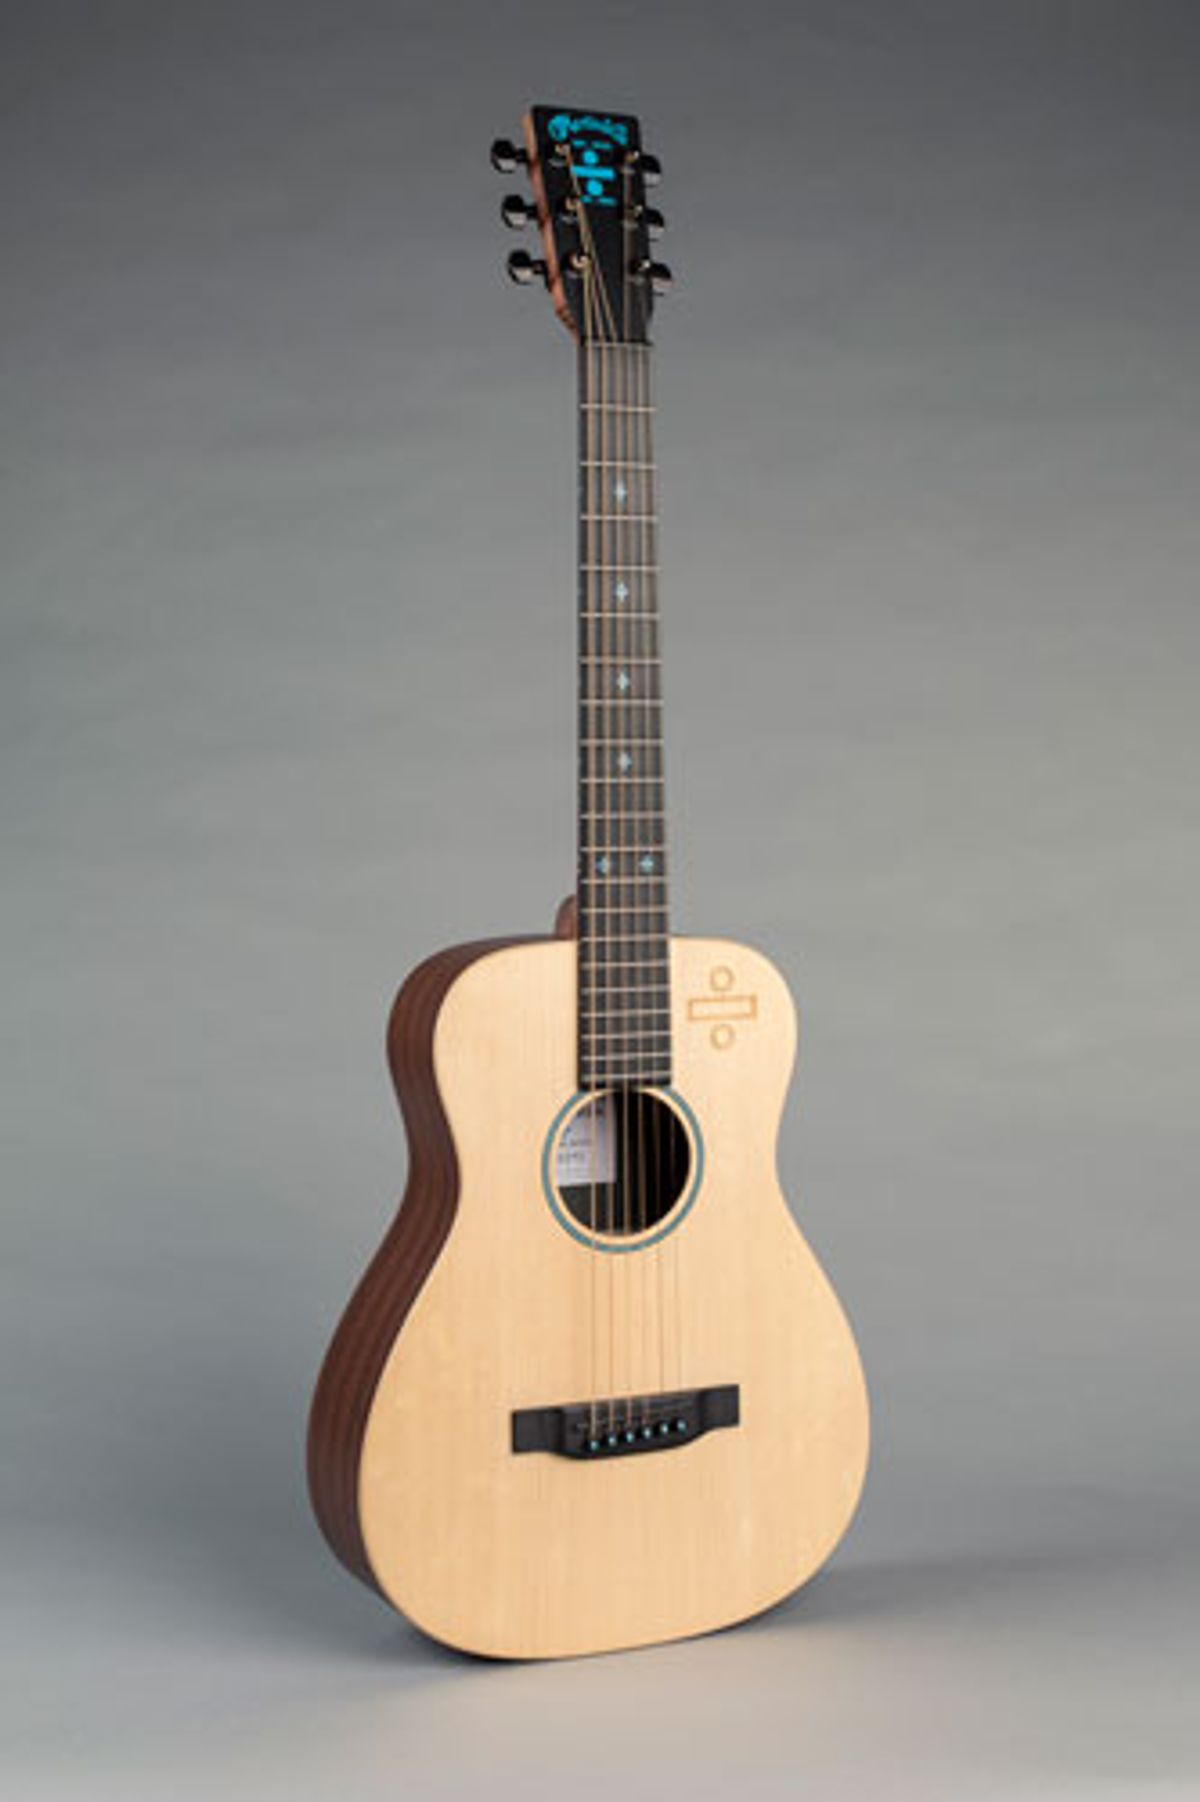 Ed Sheeran and Martin Guitar Collaborate on Third Signature Model Guitar